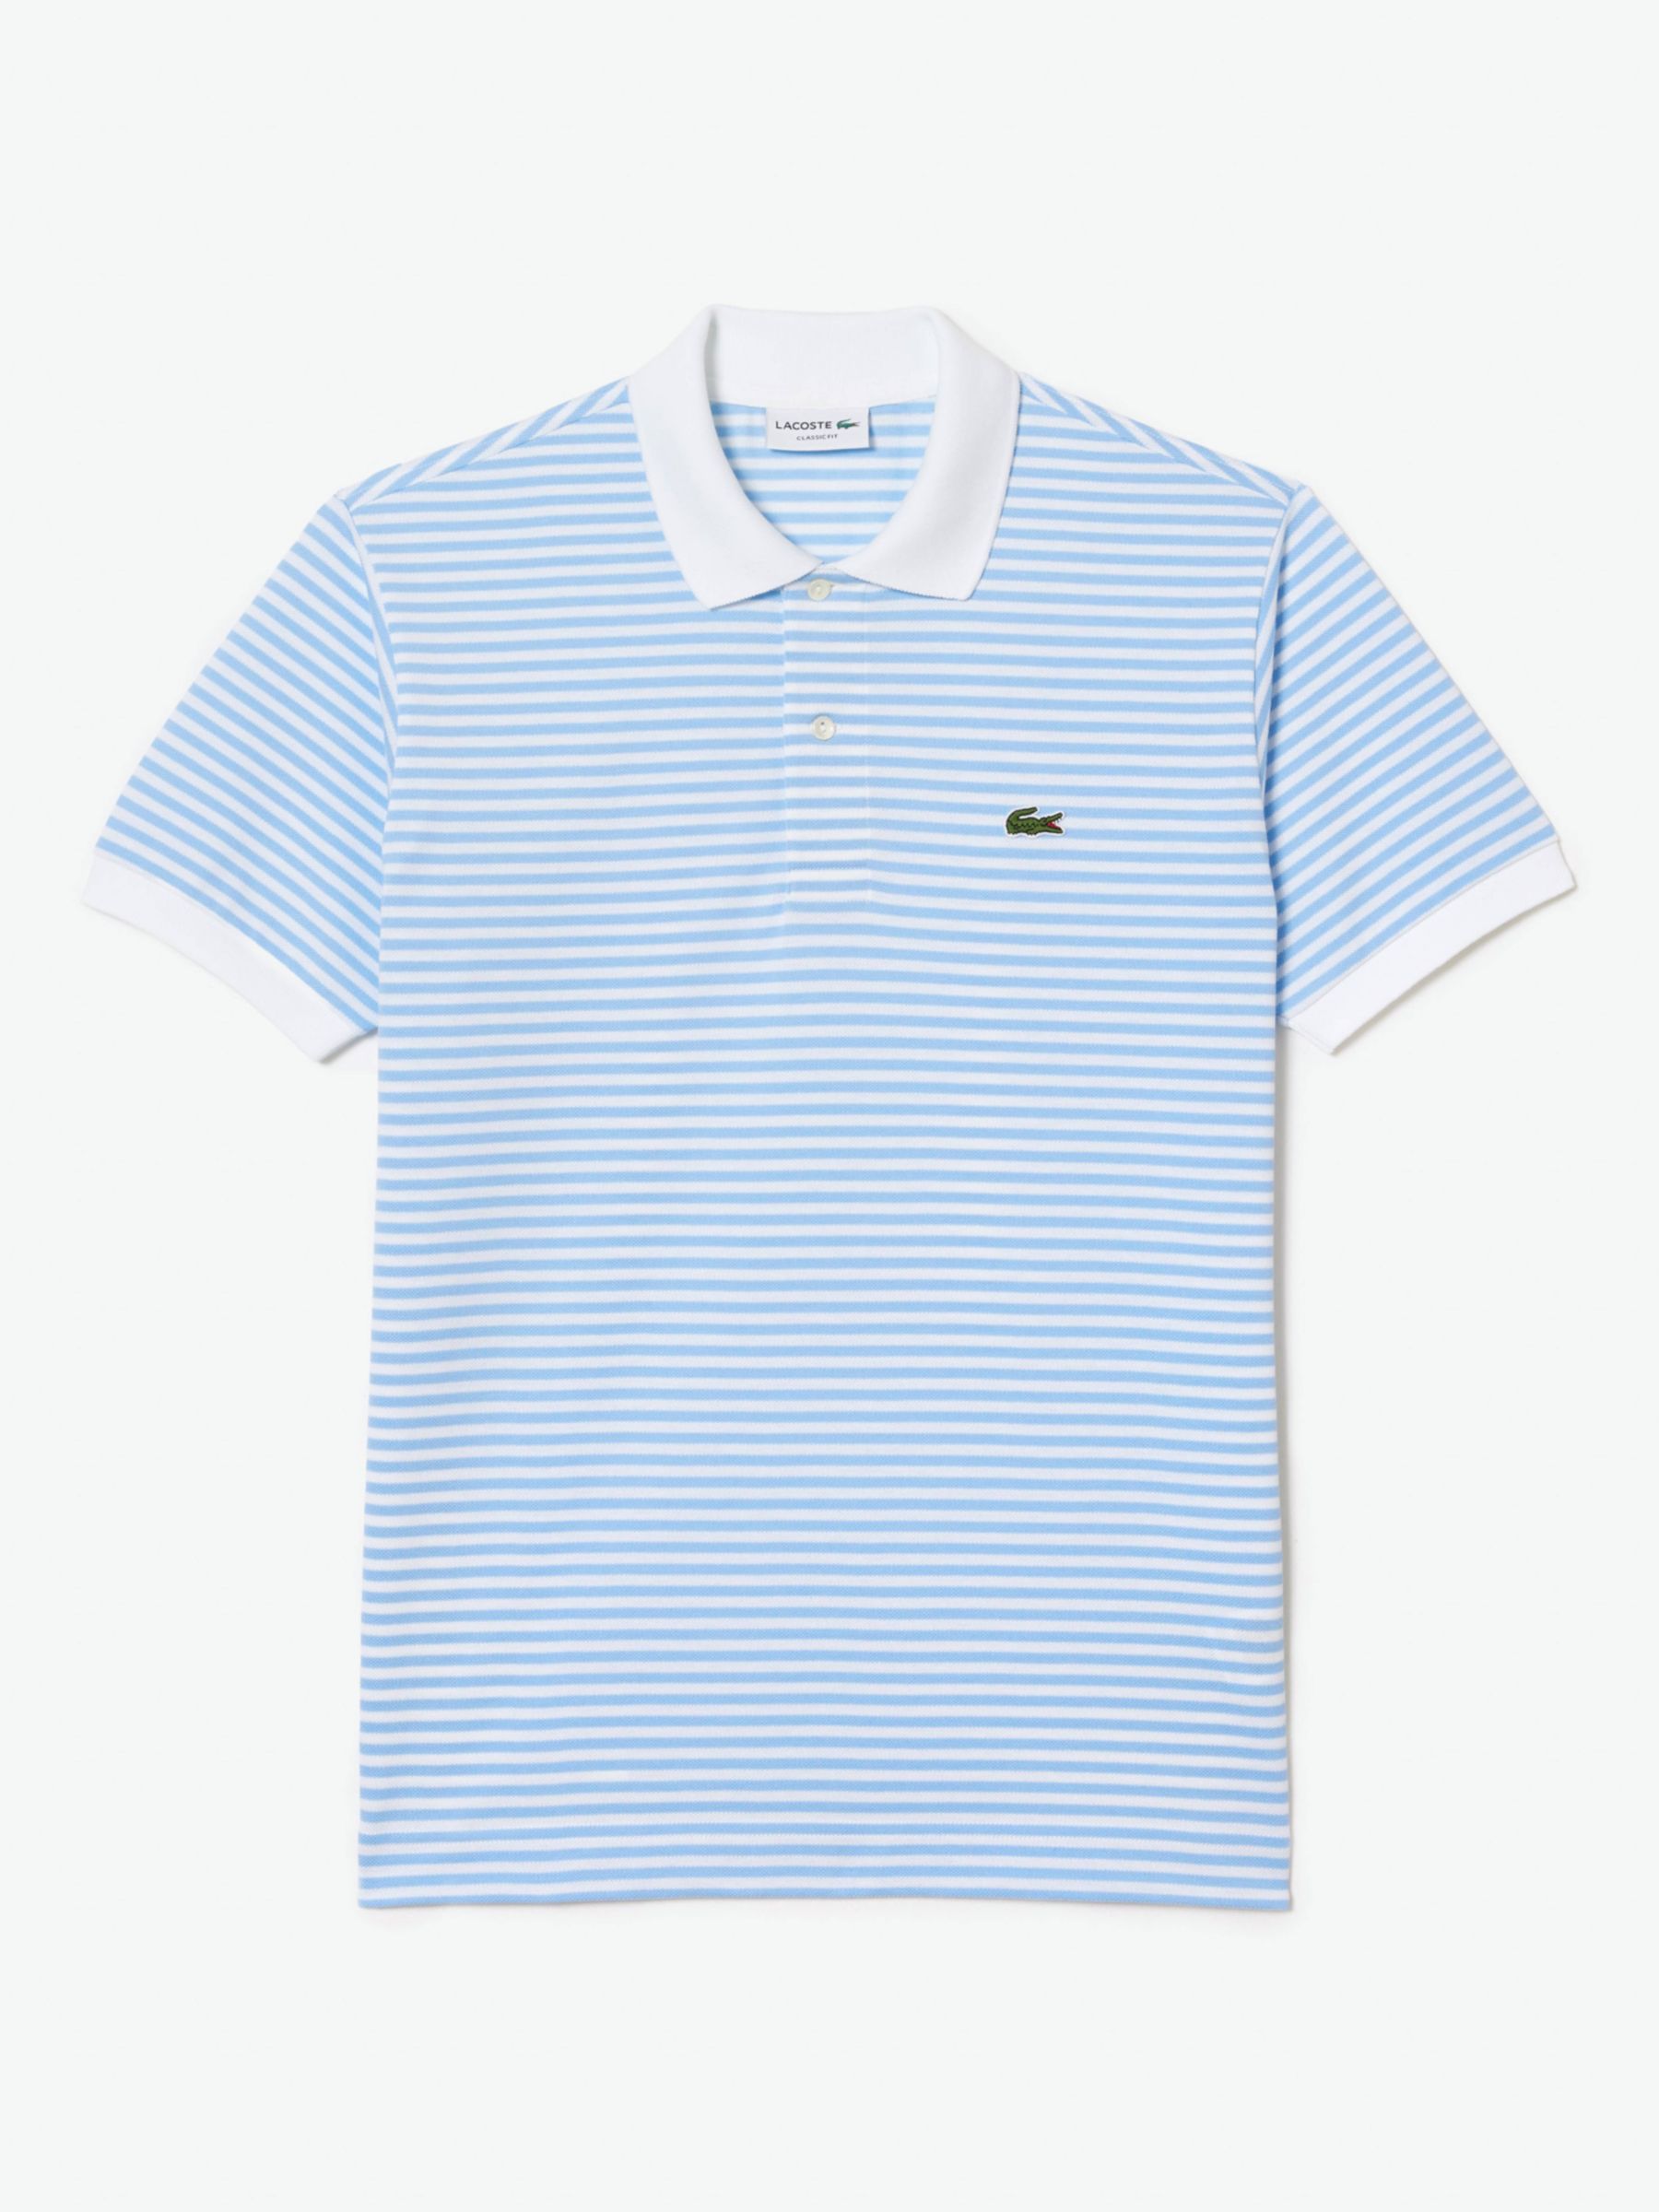 Lacoste Core Essential Striped Cotton Polo Shirt, Blue/White, S